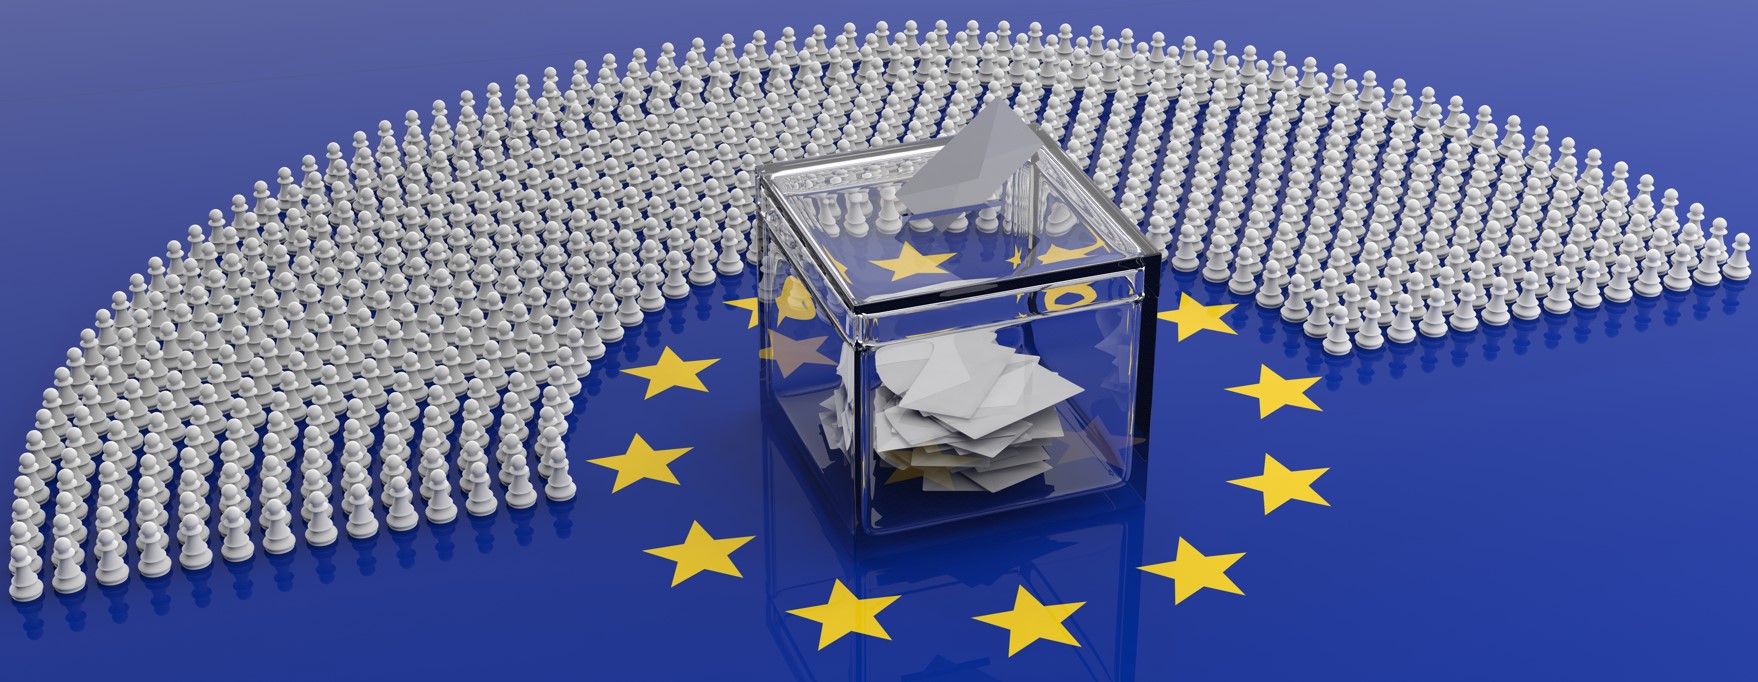 Verkiezing Europees Parlement Shutterstock  